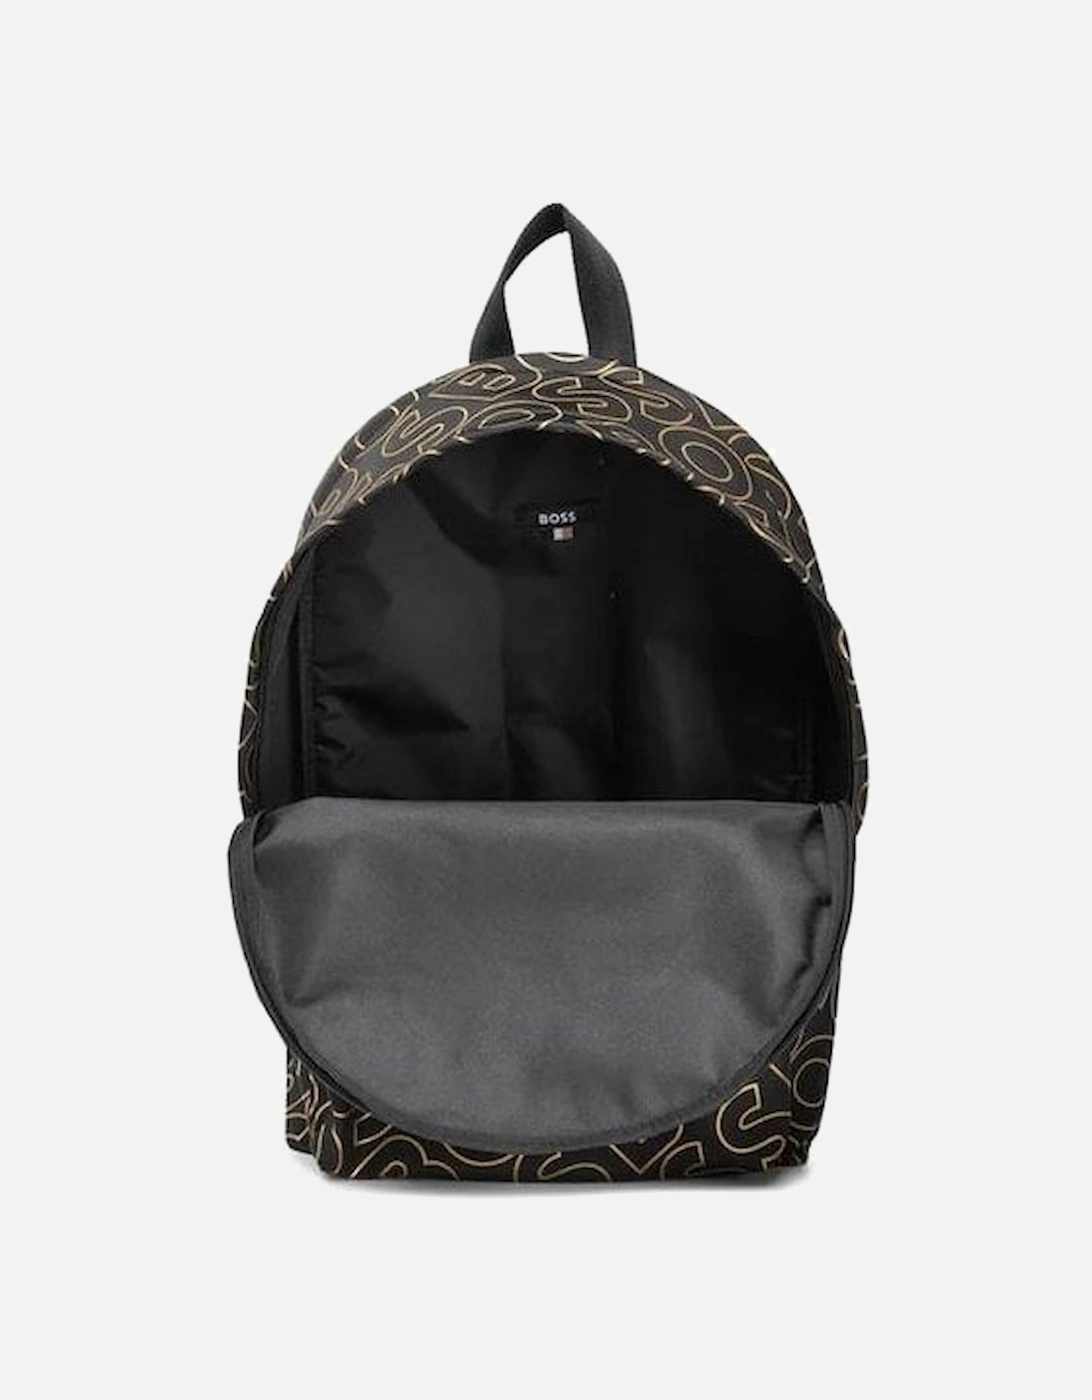 Catch_LN Allover Logo Black/Gold Backpack